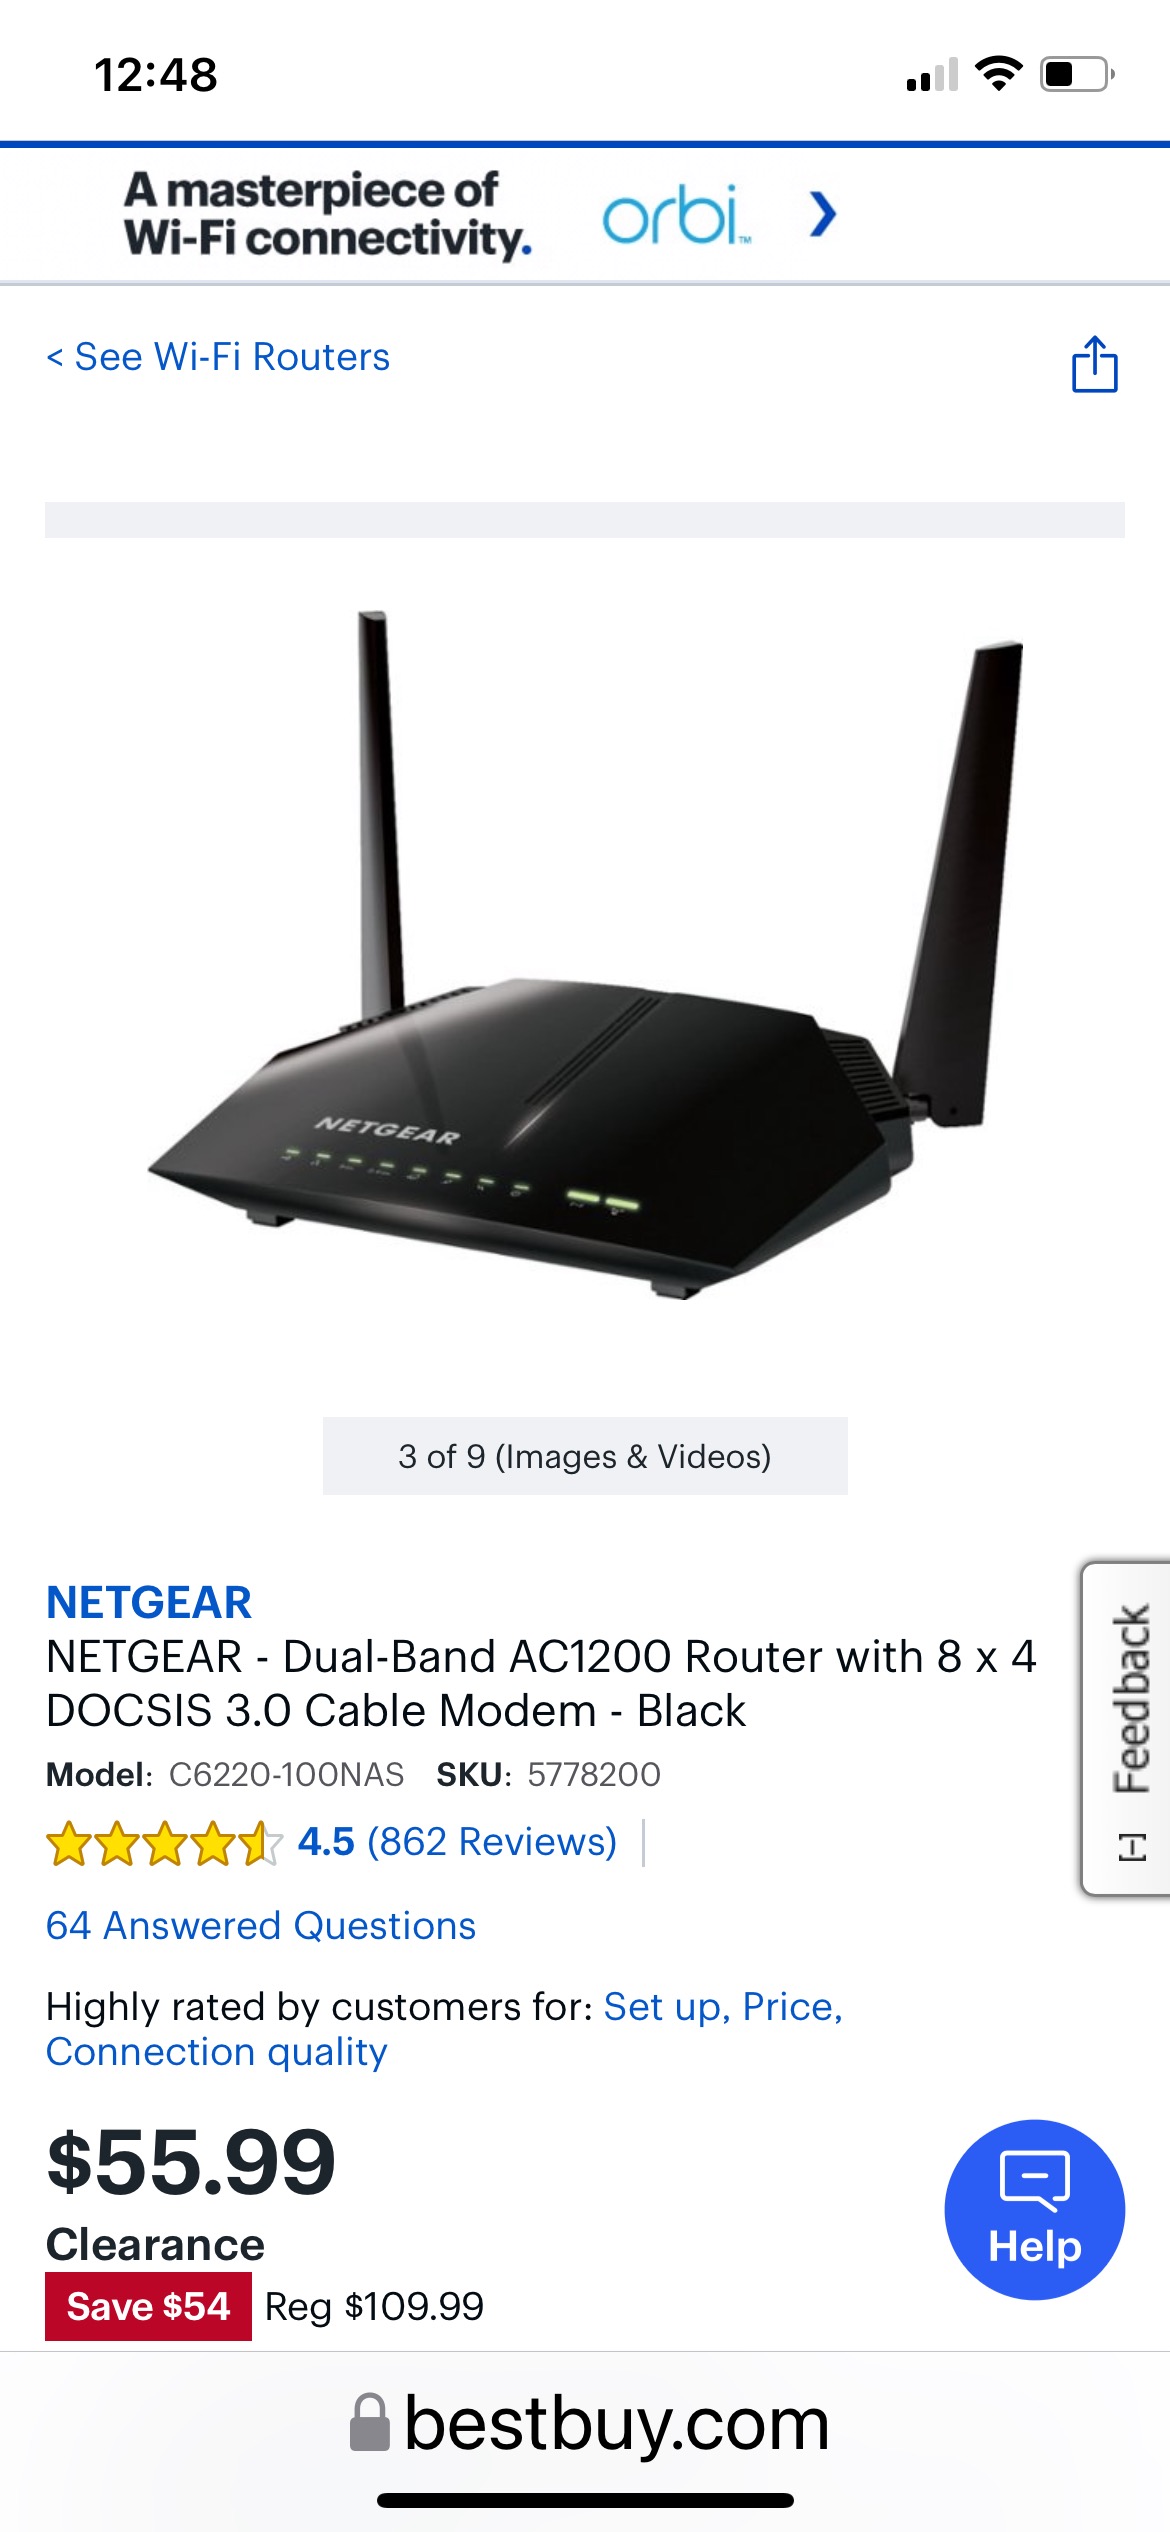 Please tell me if the NETGEAR Dual-Band AC1200 is ... - NETGEAR Communities